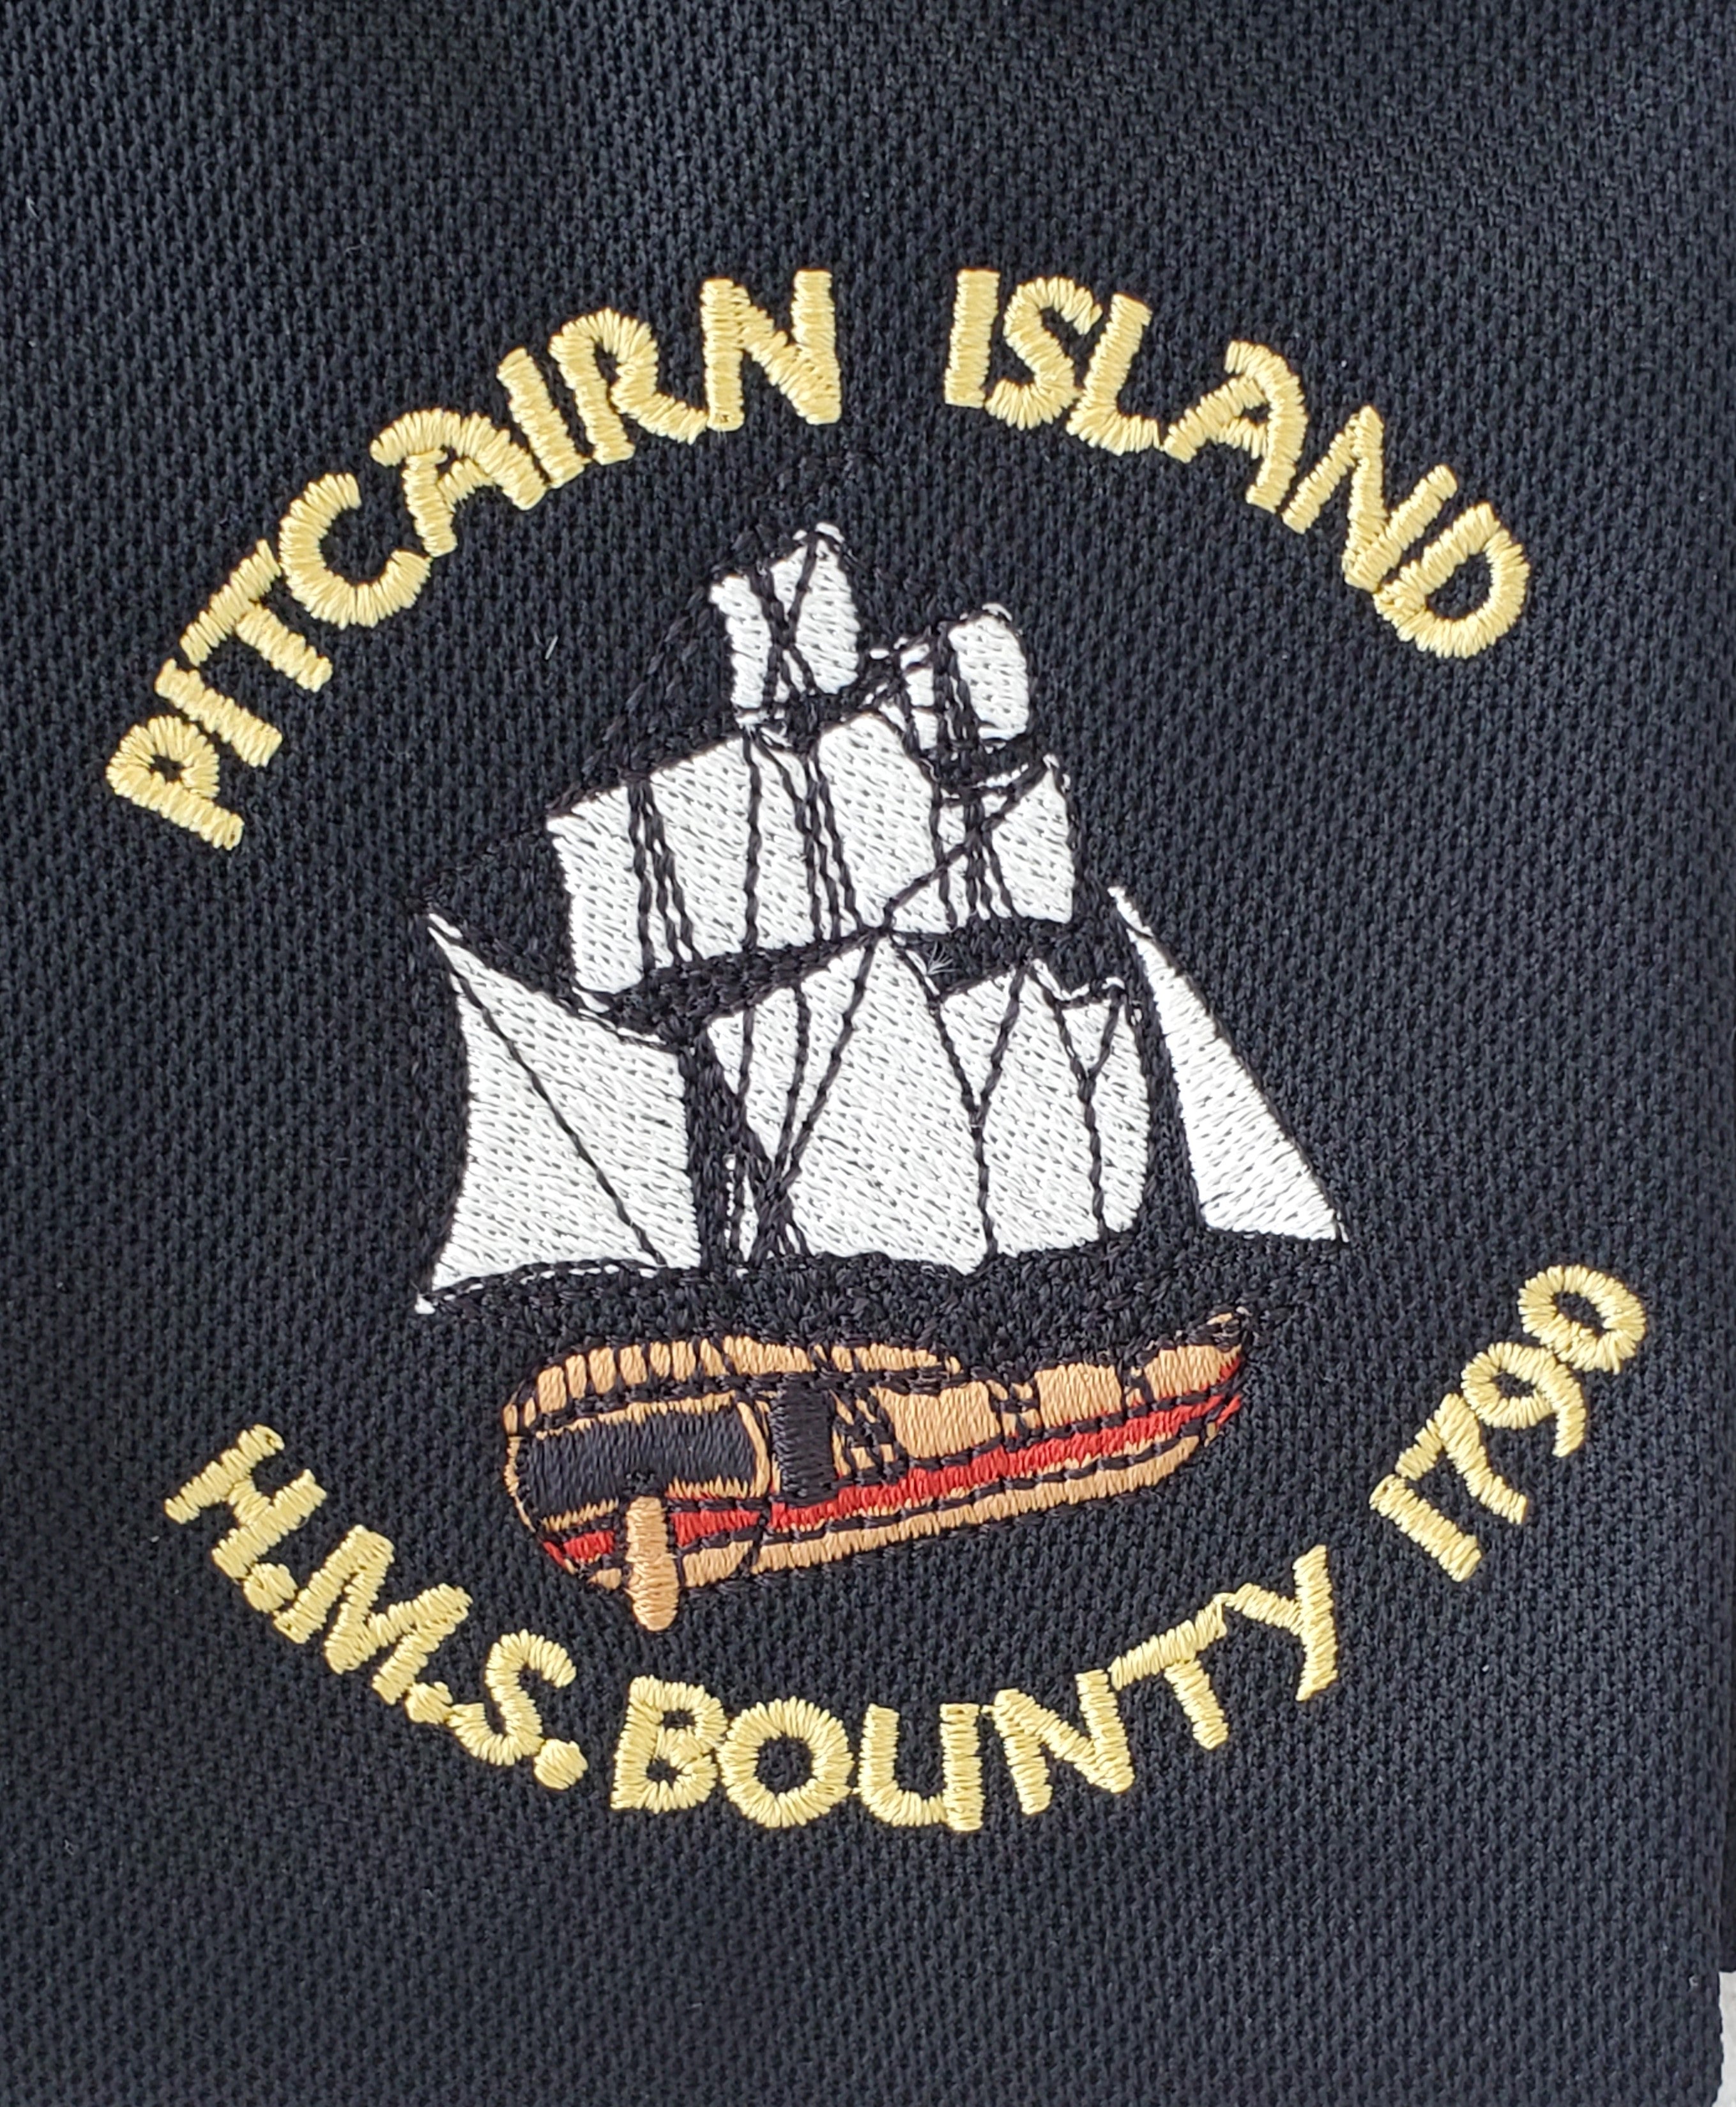 Pitcairn Island T-Shirt - HMAV Kopfgeldmotiv - Schnelltrocknendes Gewebe